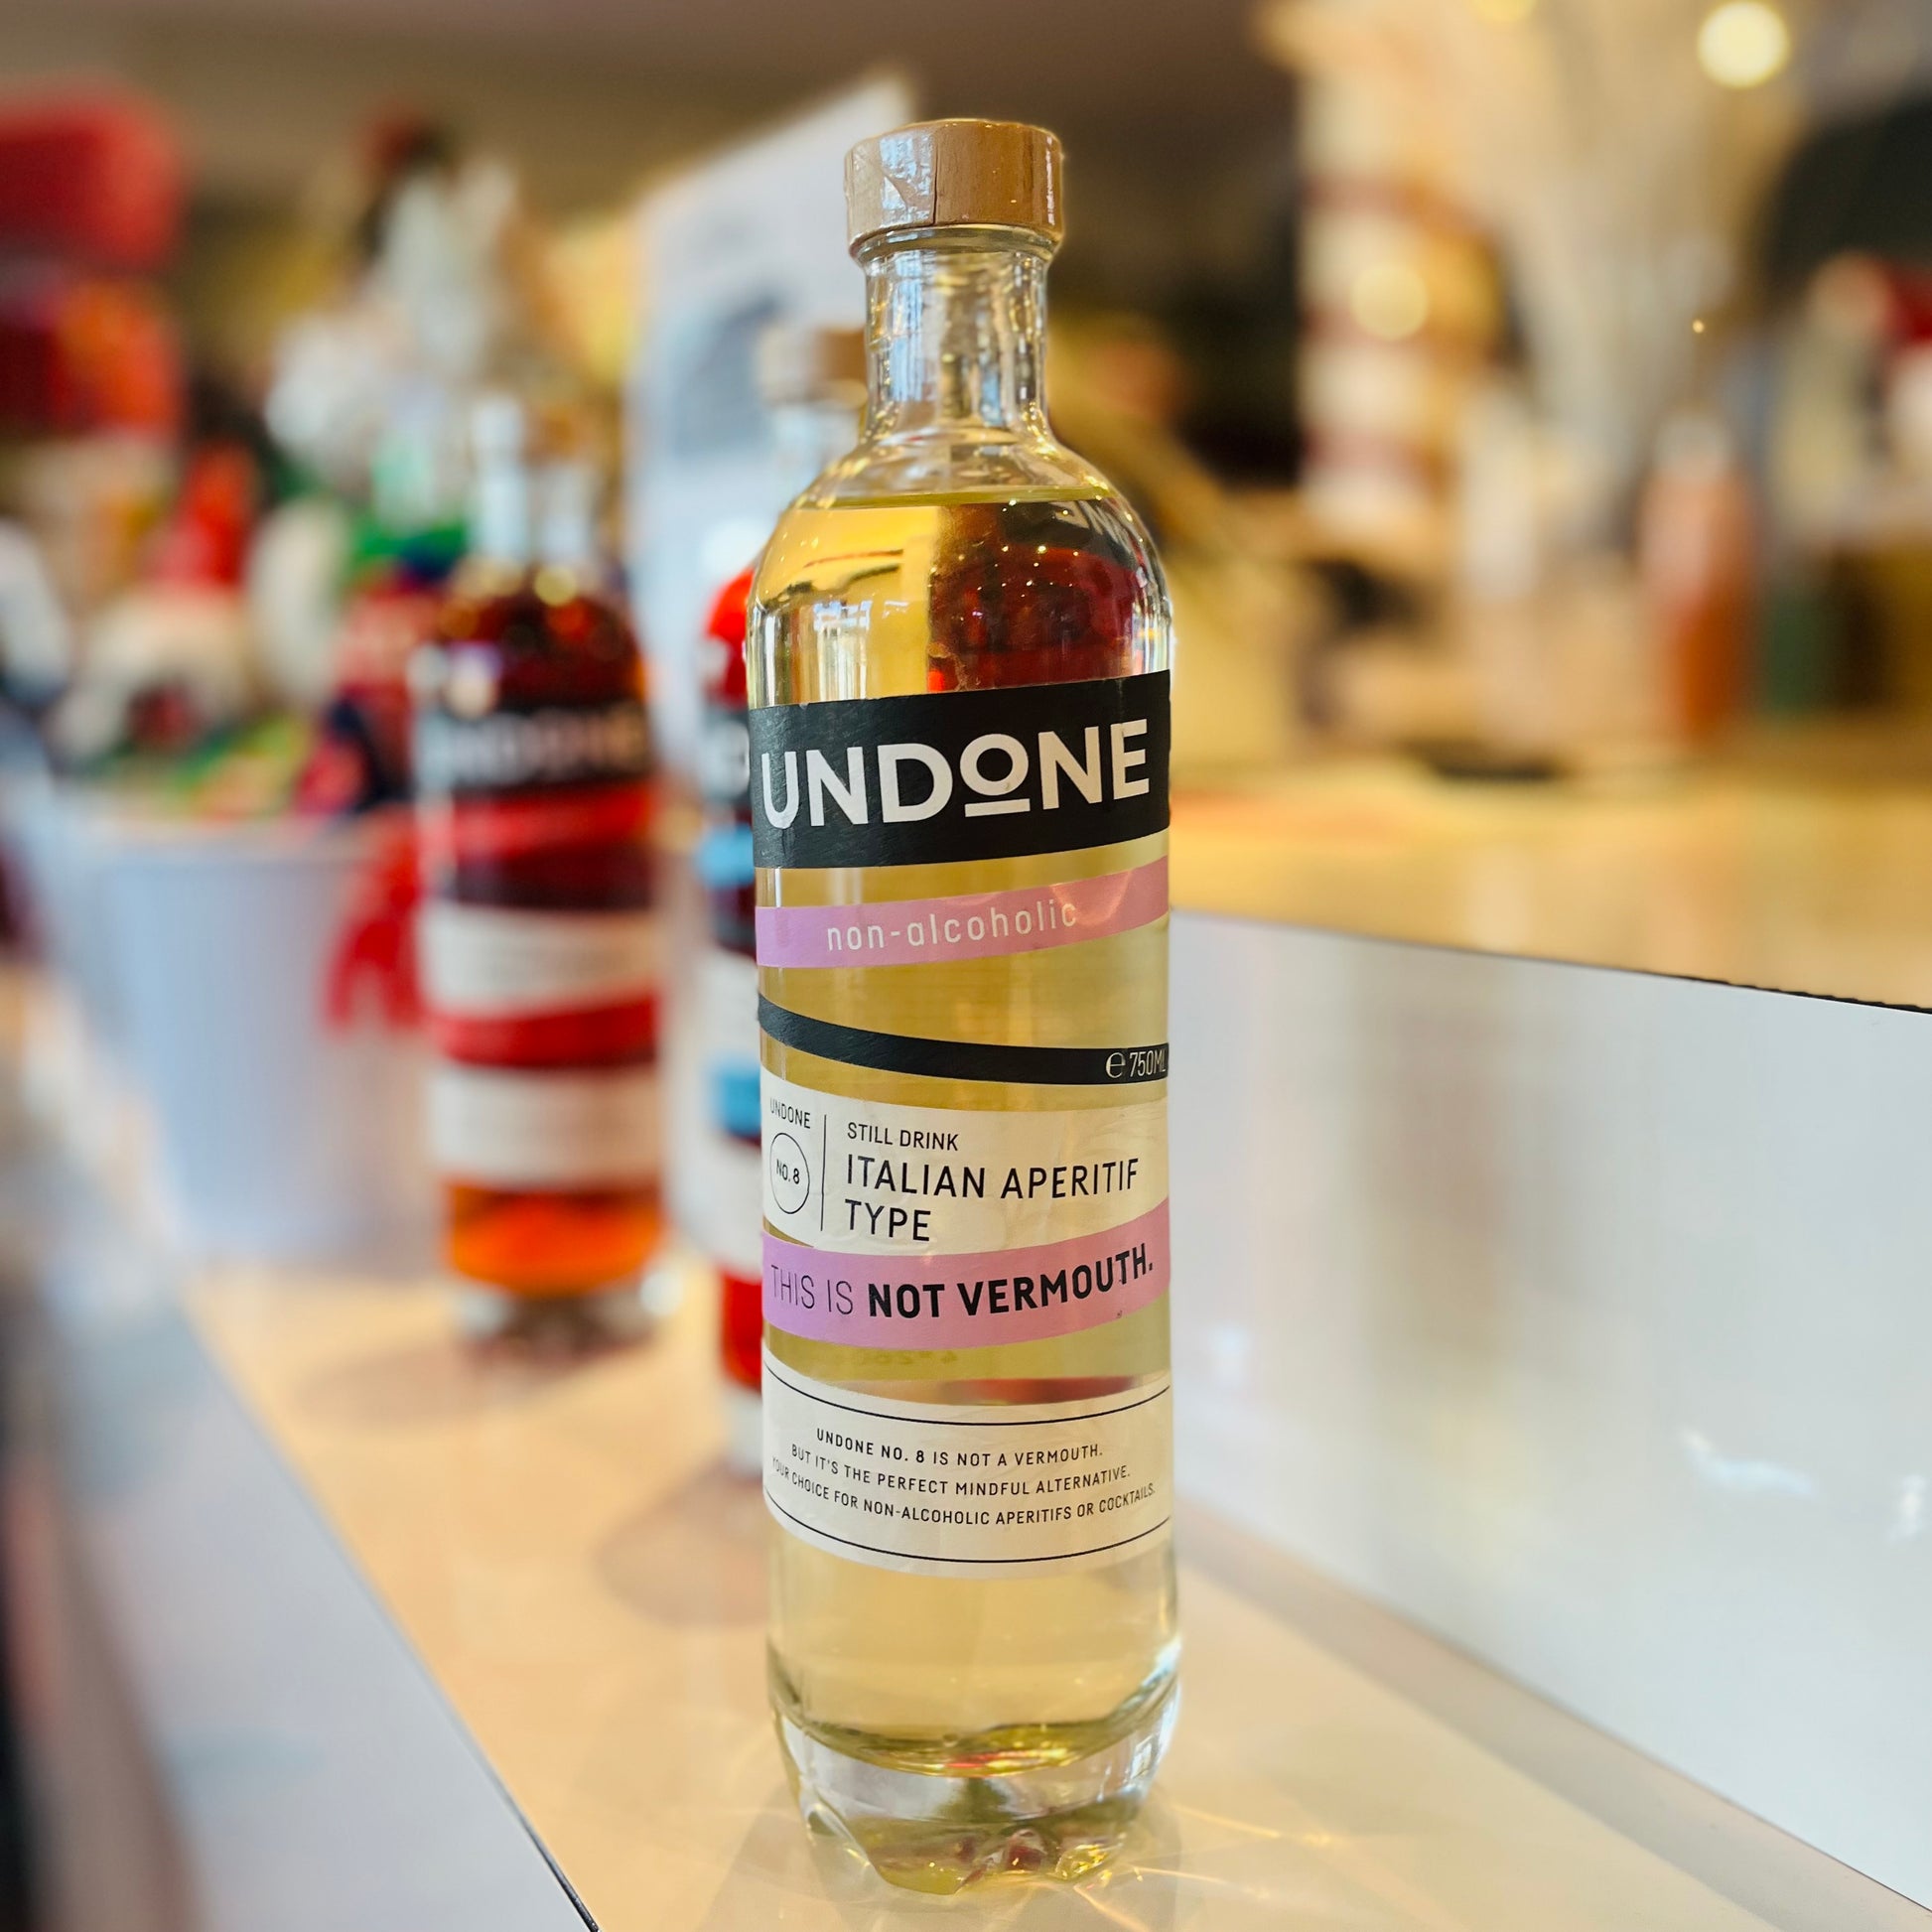 UNDONE – Pourium NON-ALCOHOLIC VERMOUTH NOT The